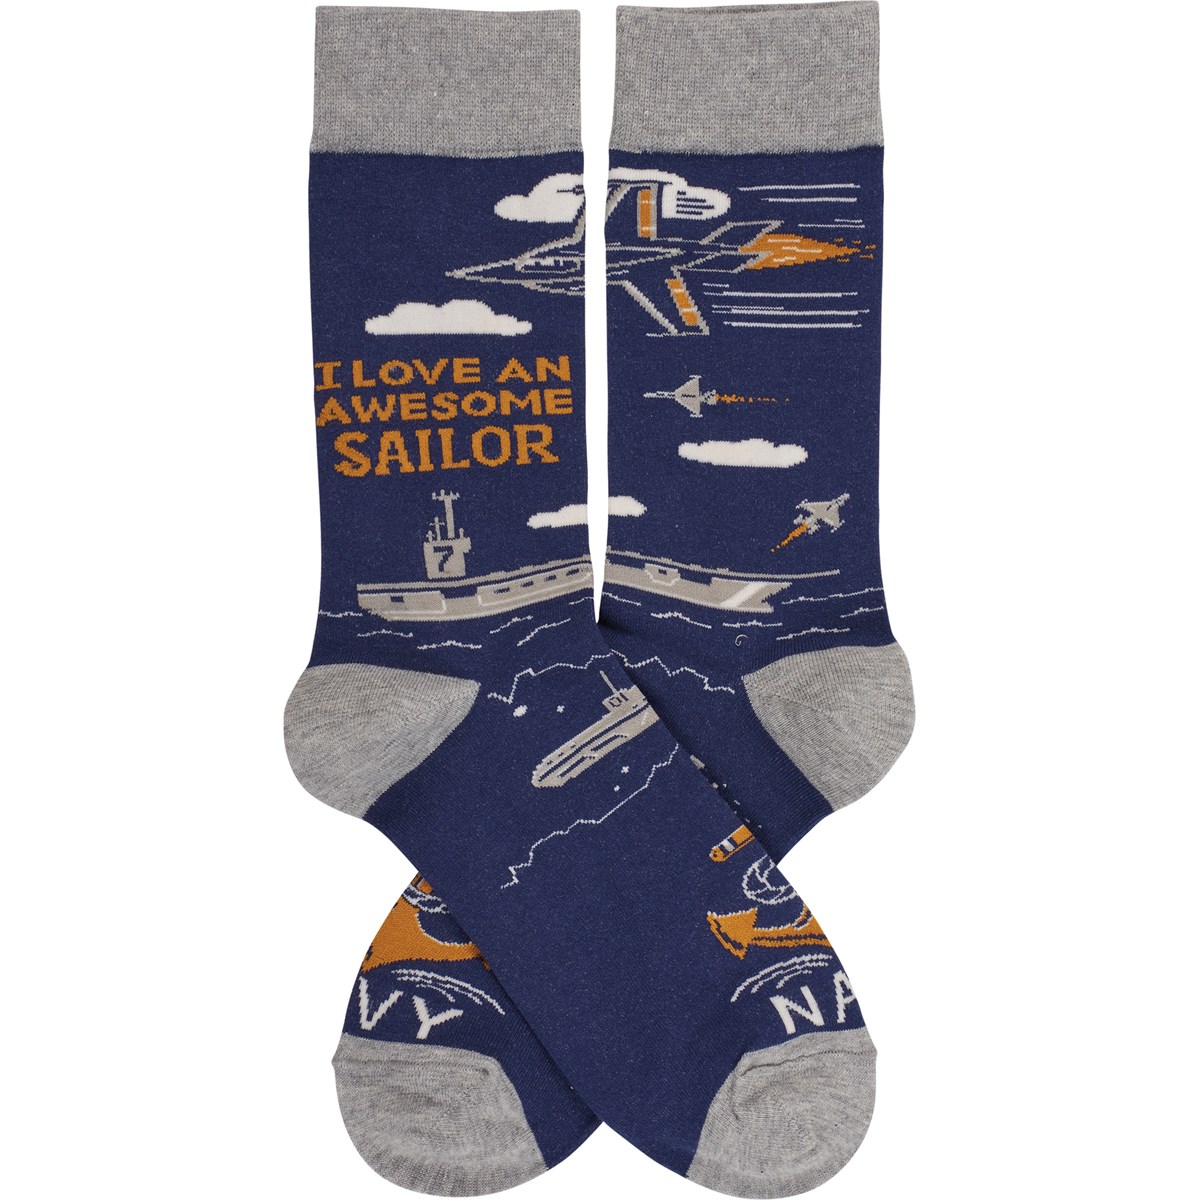 I Love An Awesome Sailor Socks - Cotton, Nylon, Spandex